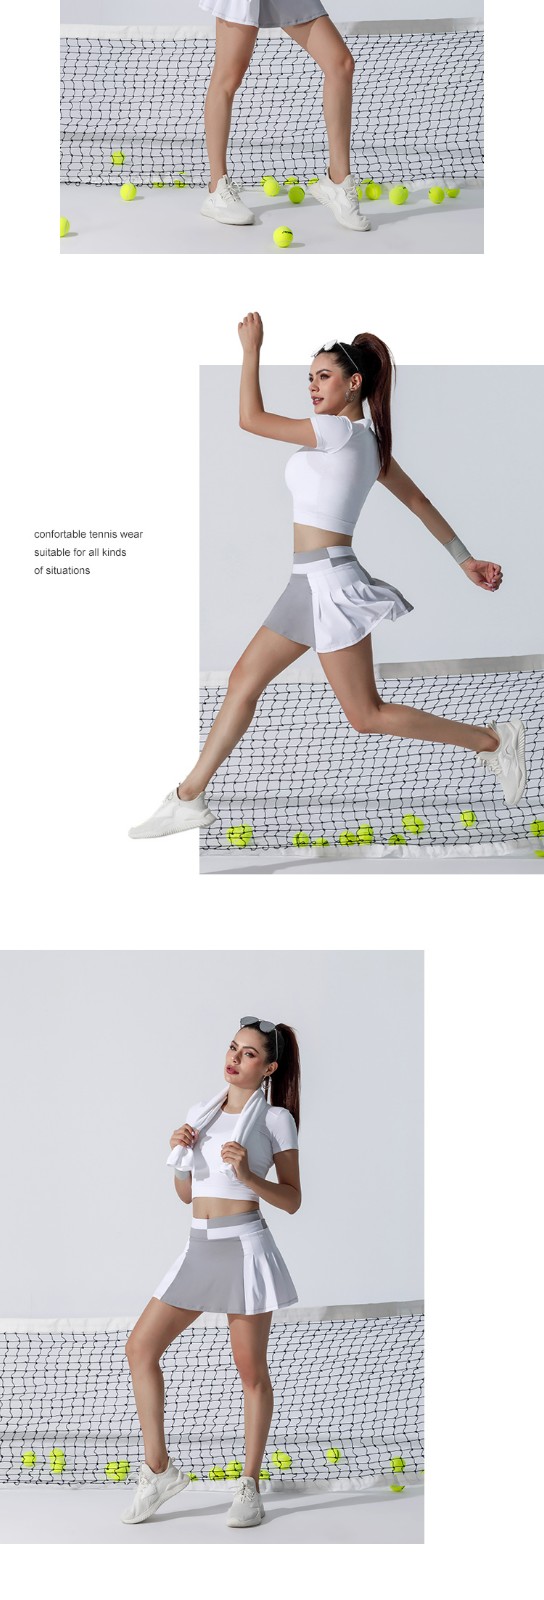 INGOR woman tennis clothes production-5